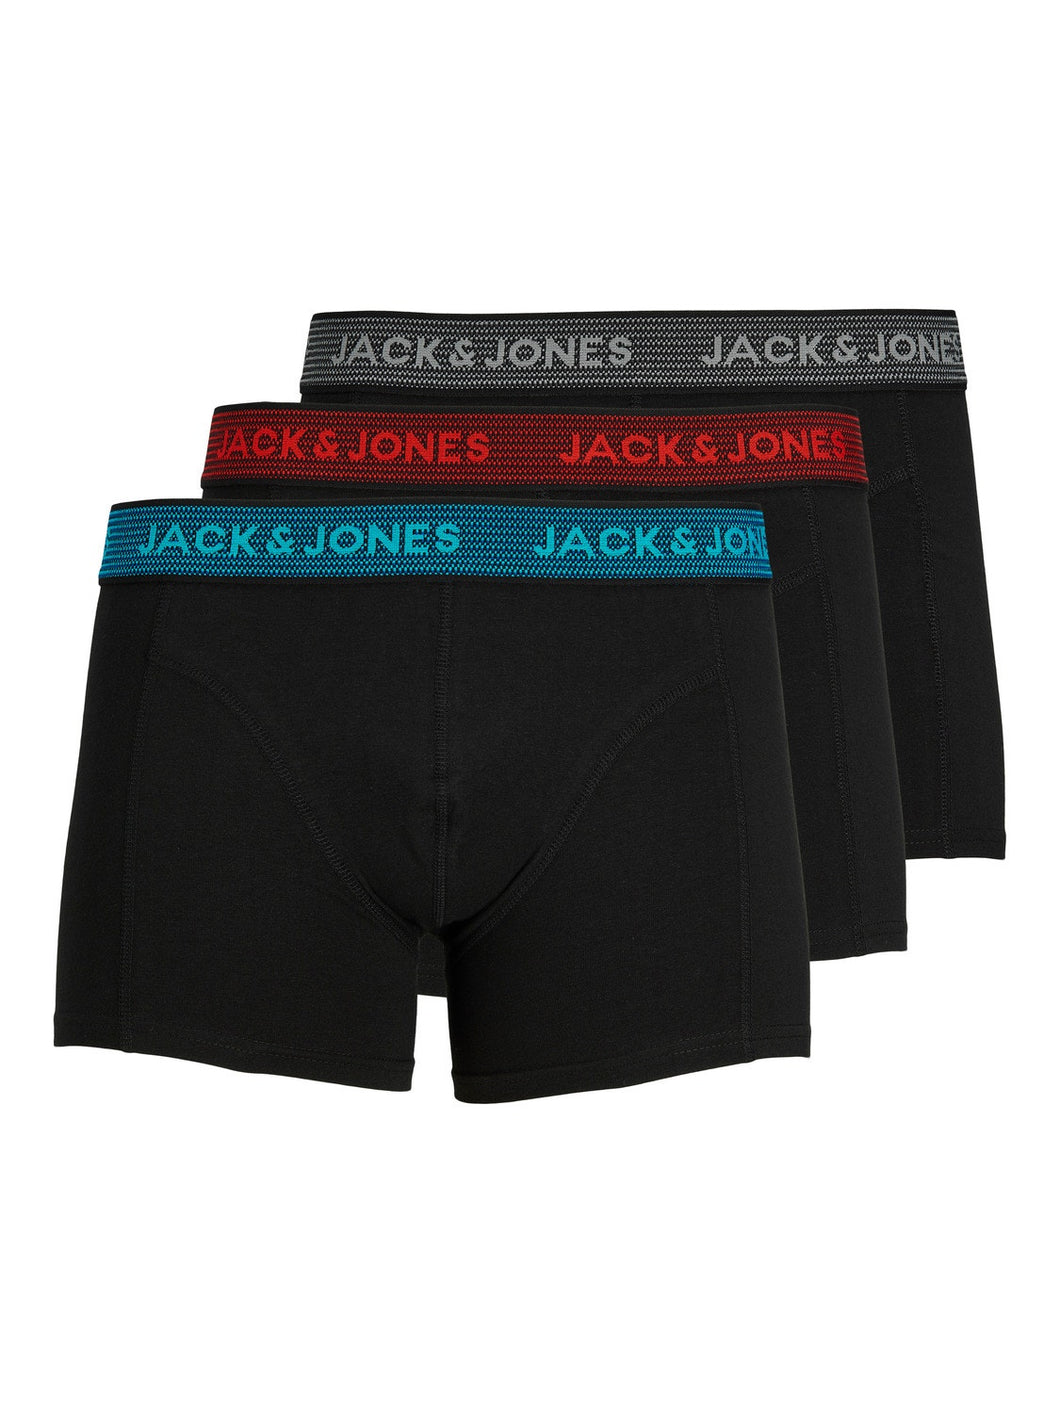 Jack&Jones 3-PACK alushousut